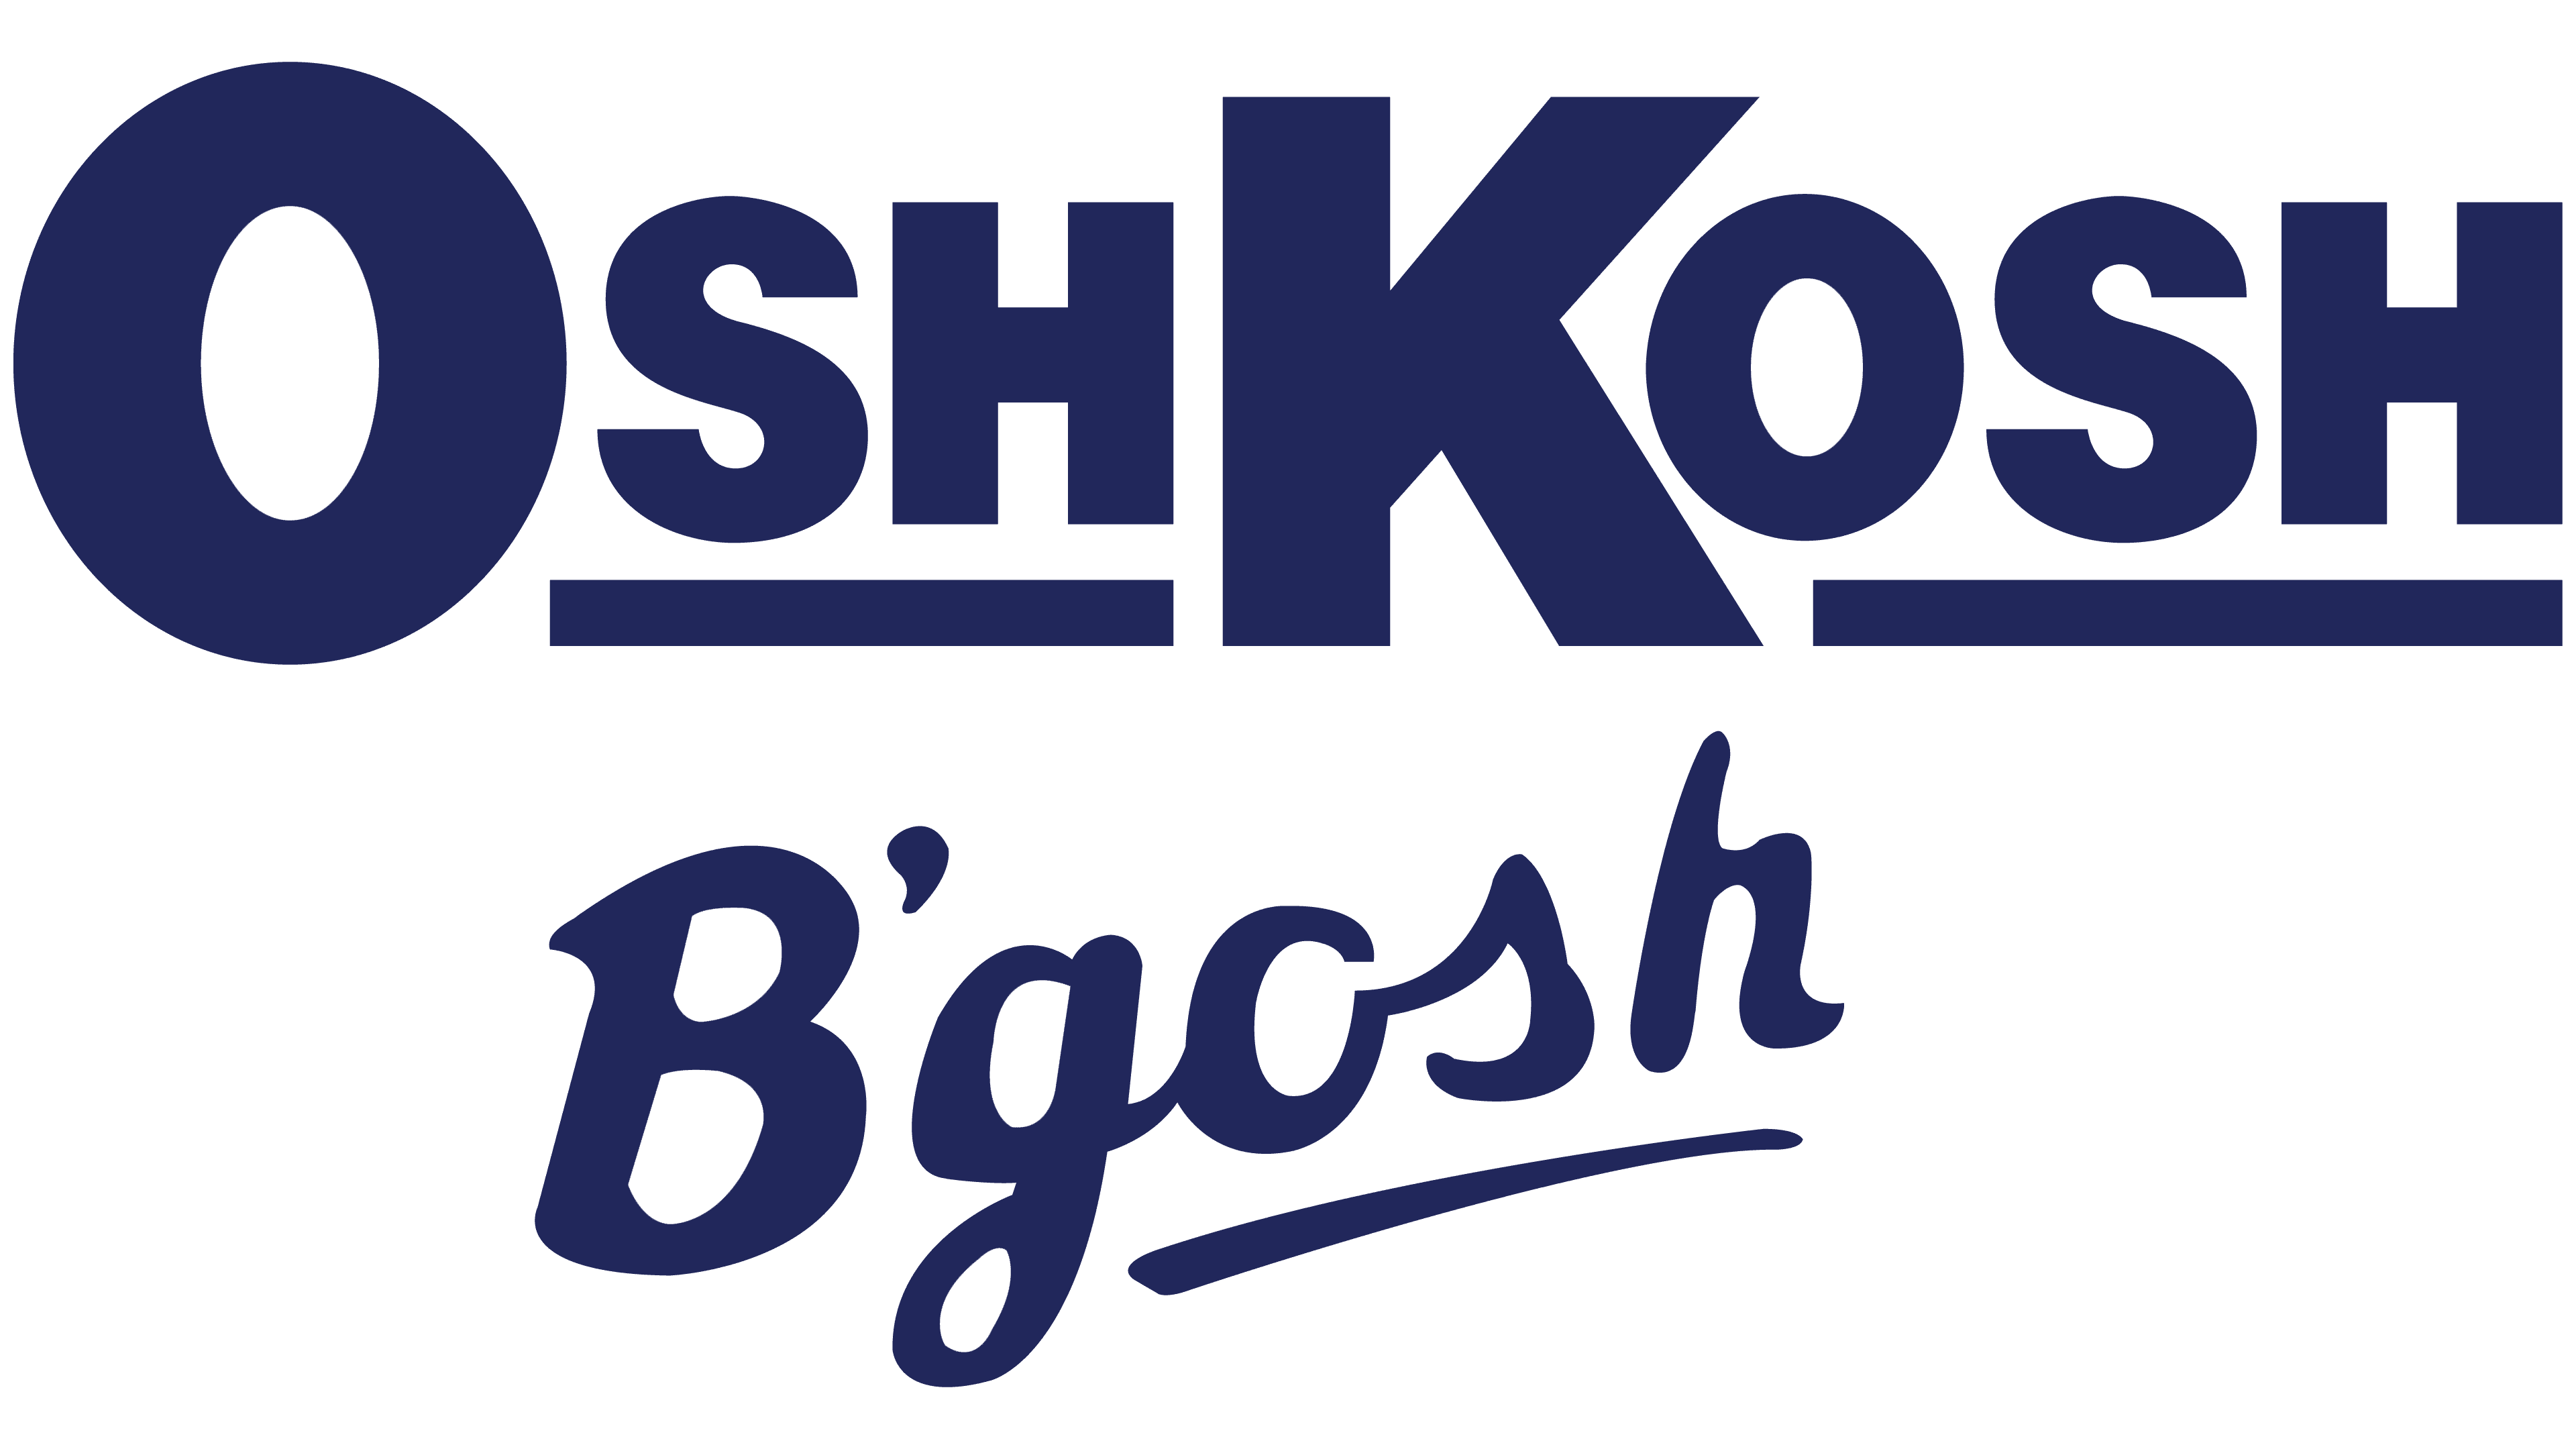 OshKosh B'gosh integration